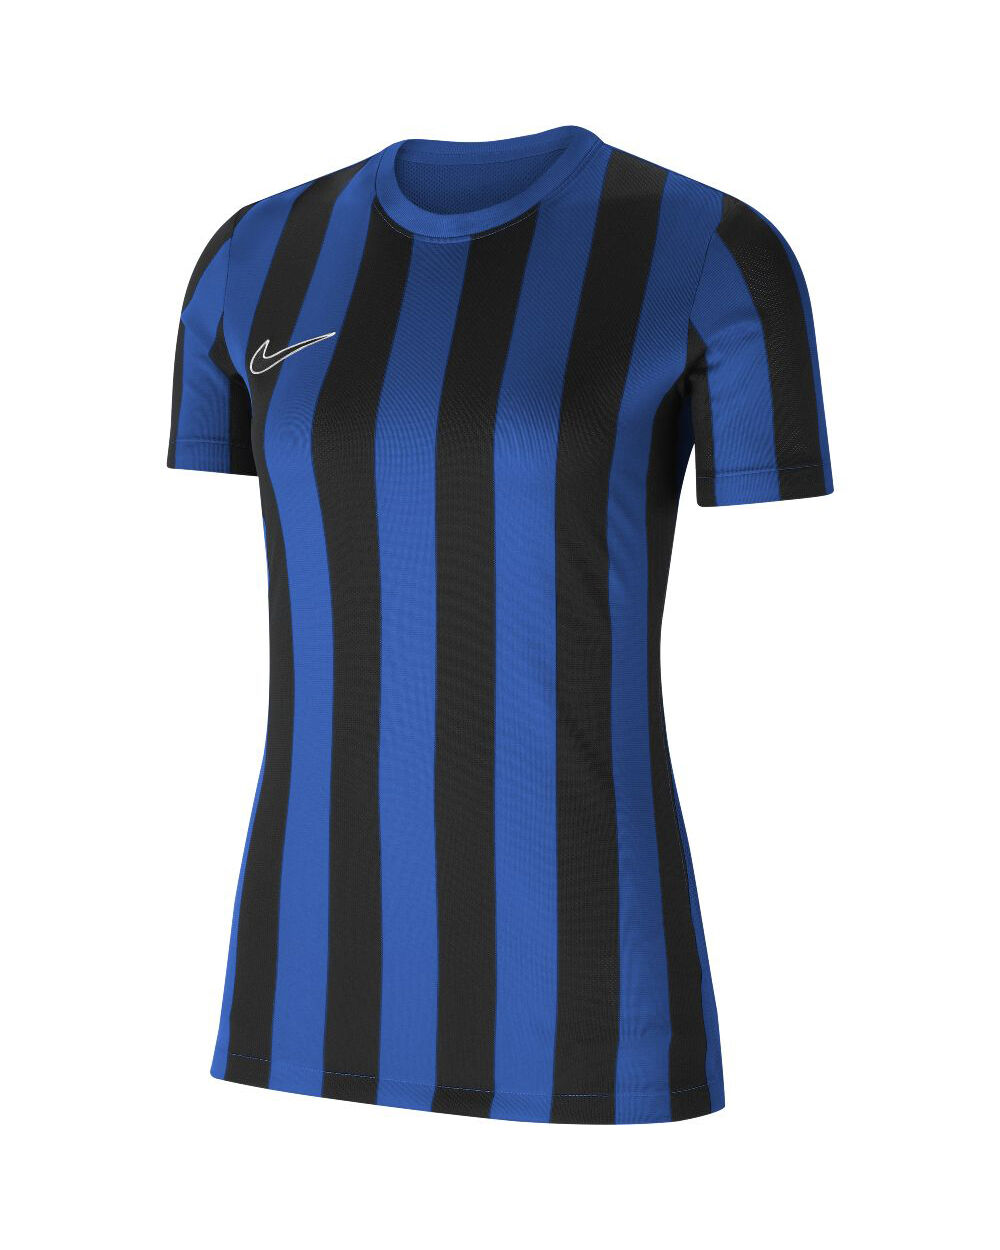 Camiseta Nike Striped Division IV Azul Real y Negro para Mujeres - CW3816-463